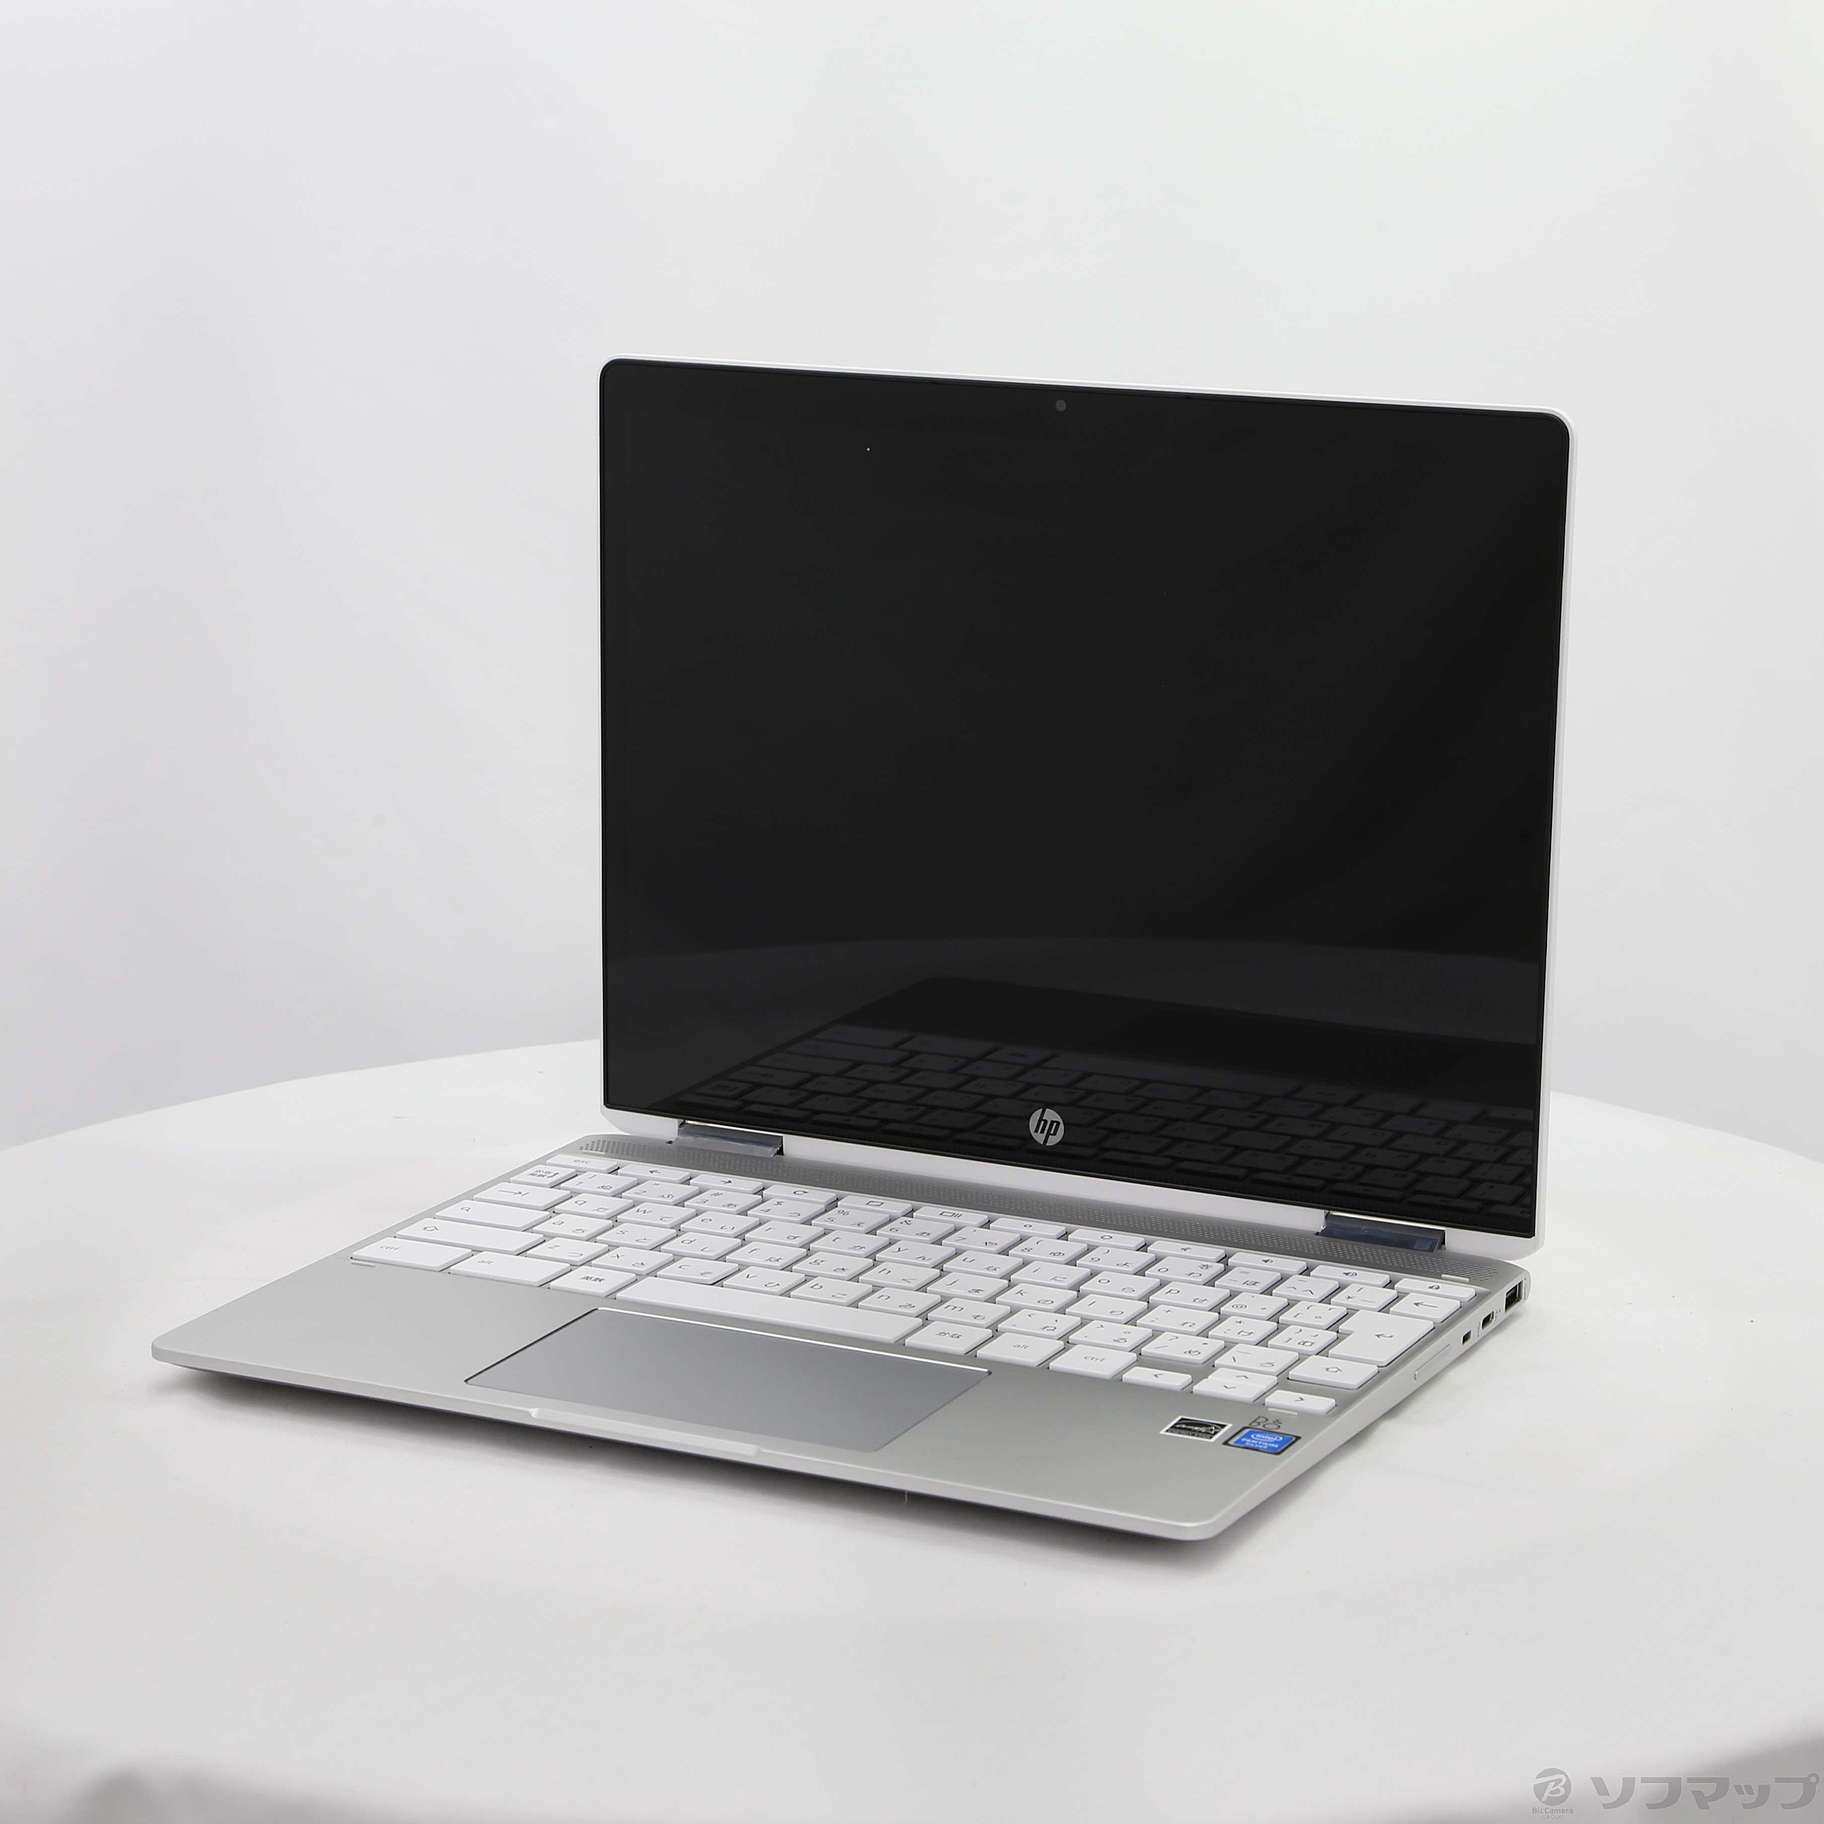 HP Chromebook x360 12b-ca0002T 訳あり 美品 - ノートPC